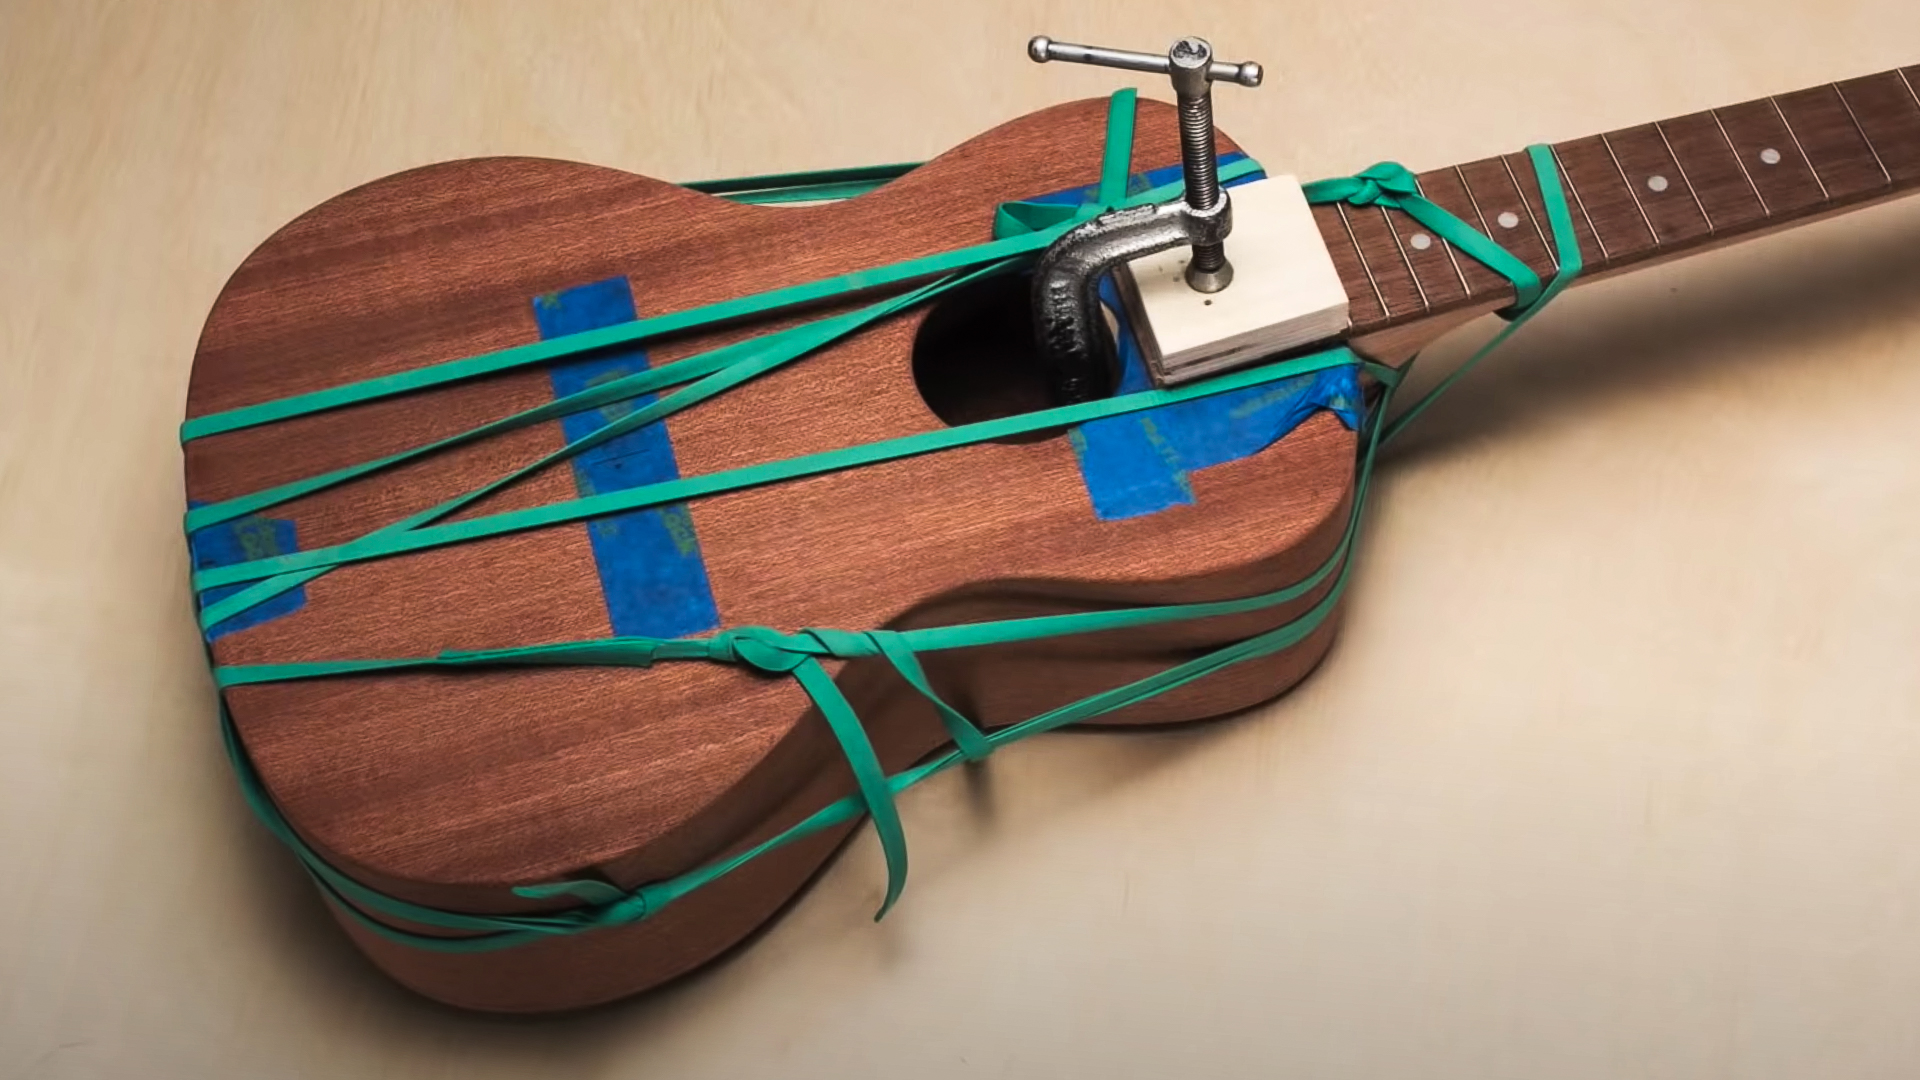 Rubber bands and clamps holding glued ukulele neck